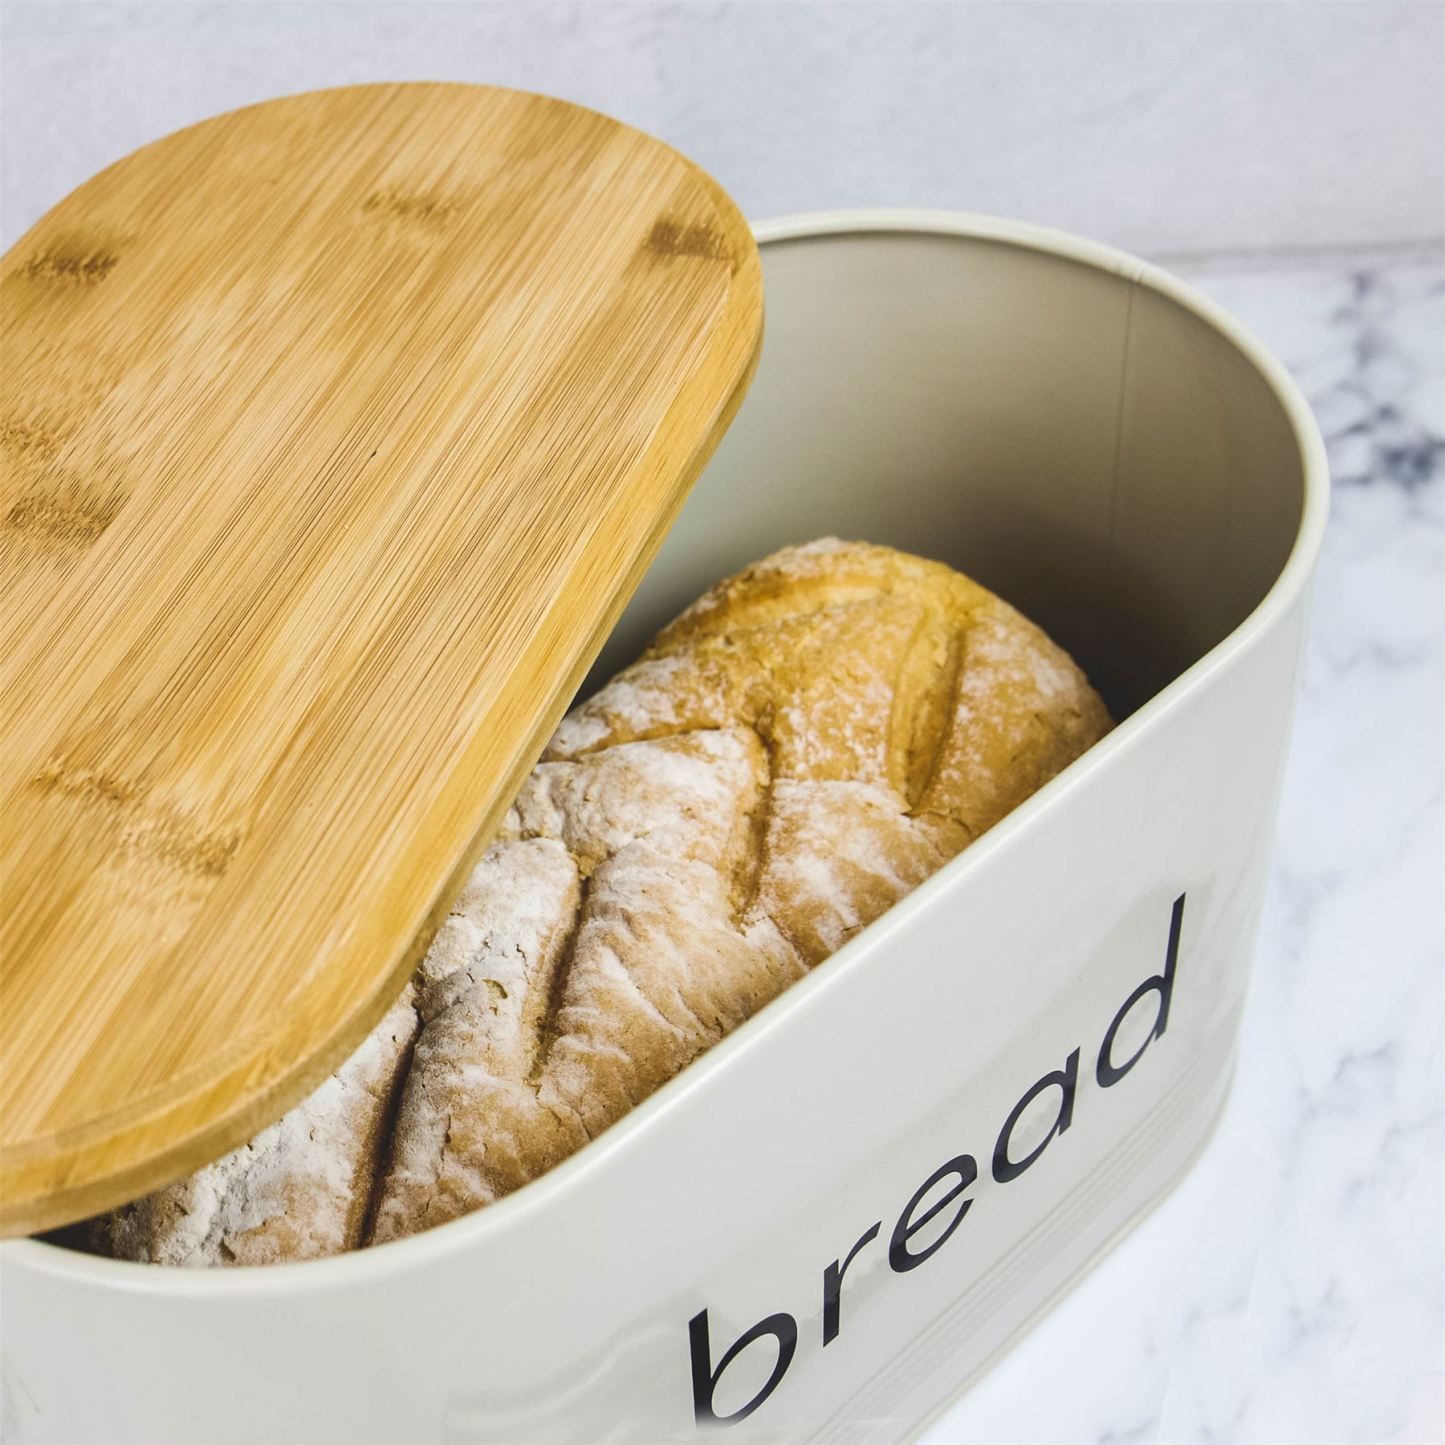 Kitchen Bread Bin with Bamboo Chopping Board Lid | M&W